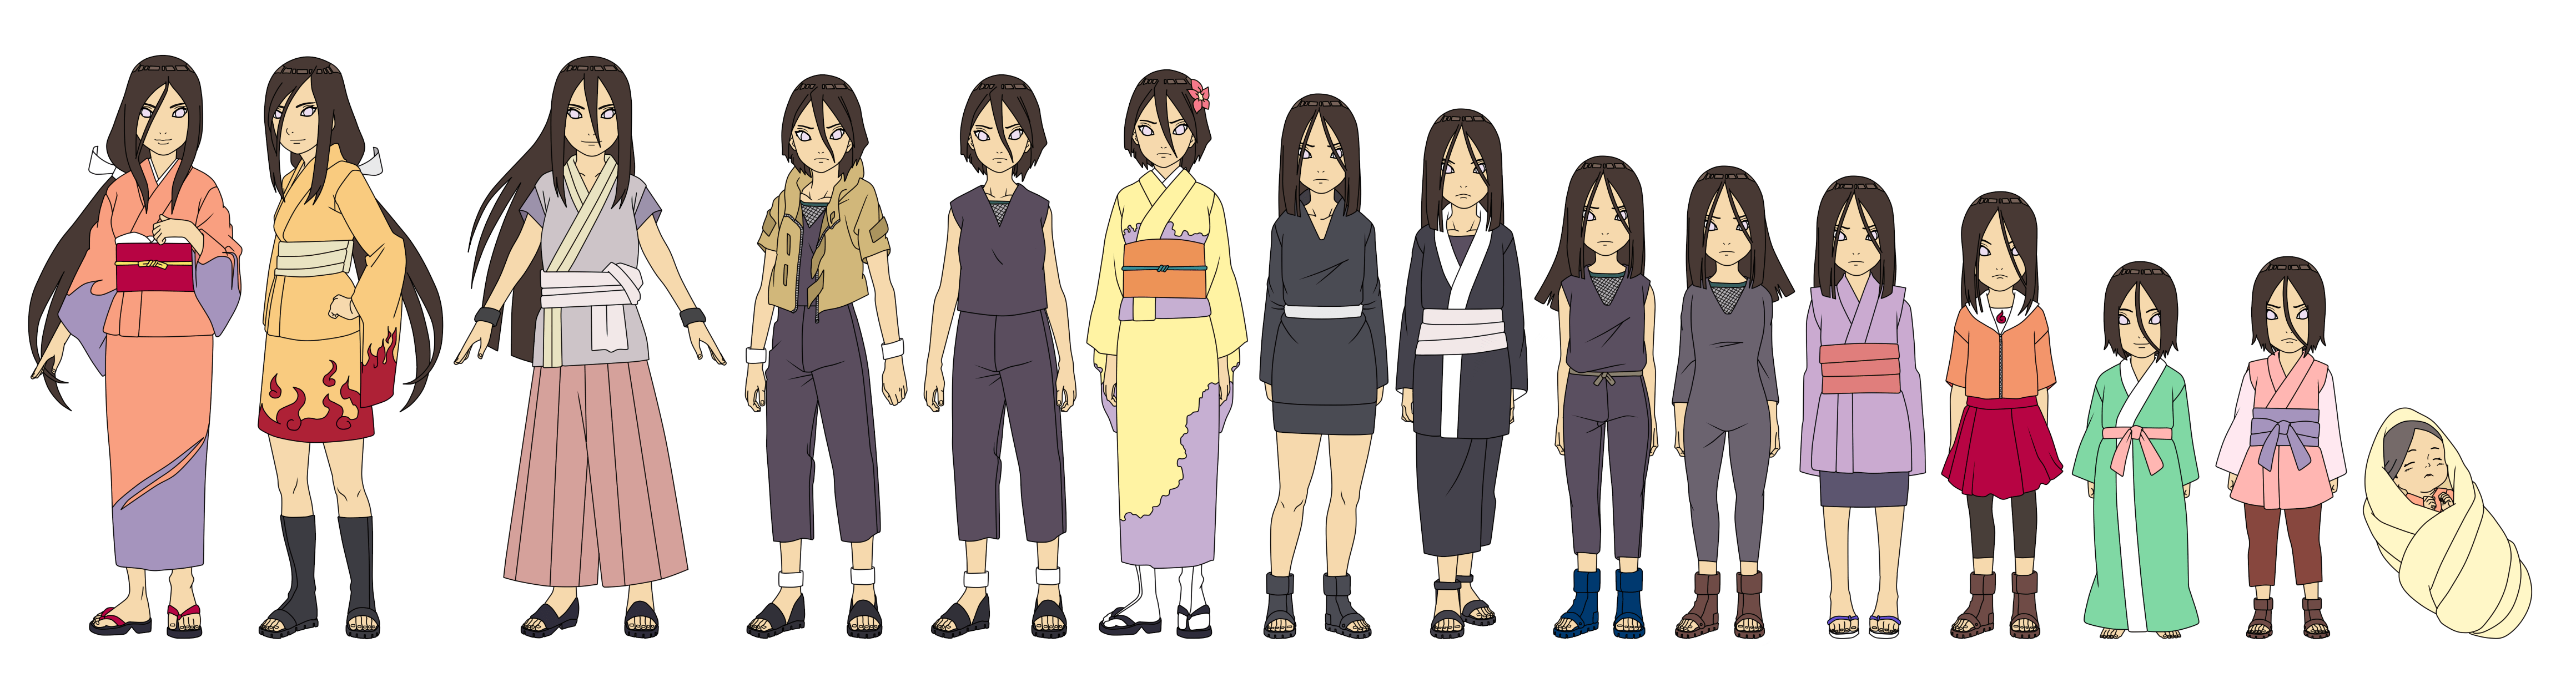 Hanabi Hyuuga Outfit Color by SunakiSabakuno.